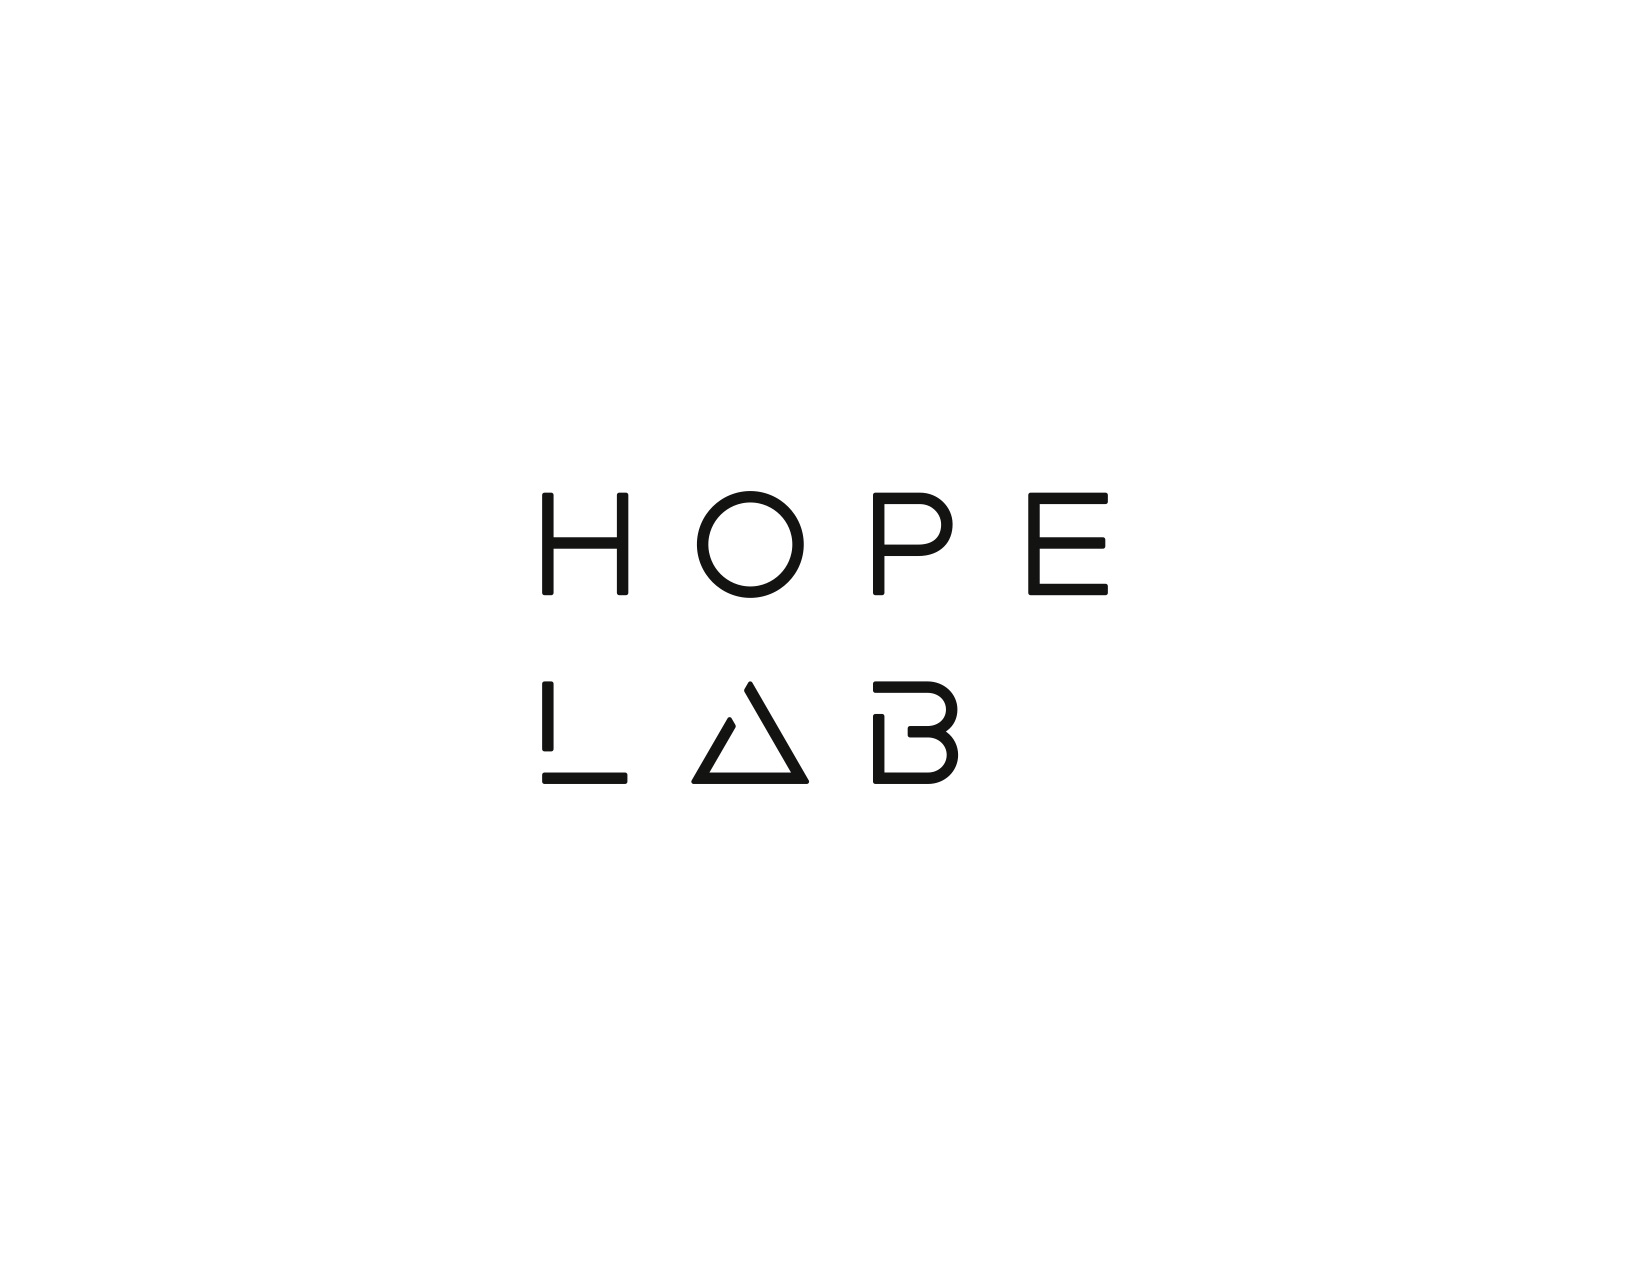 HopeLab Foundation, Inc.